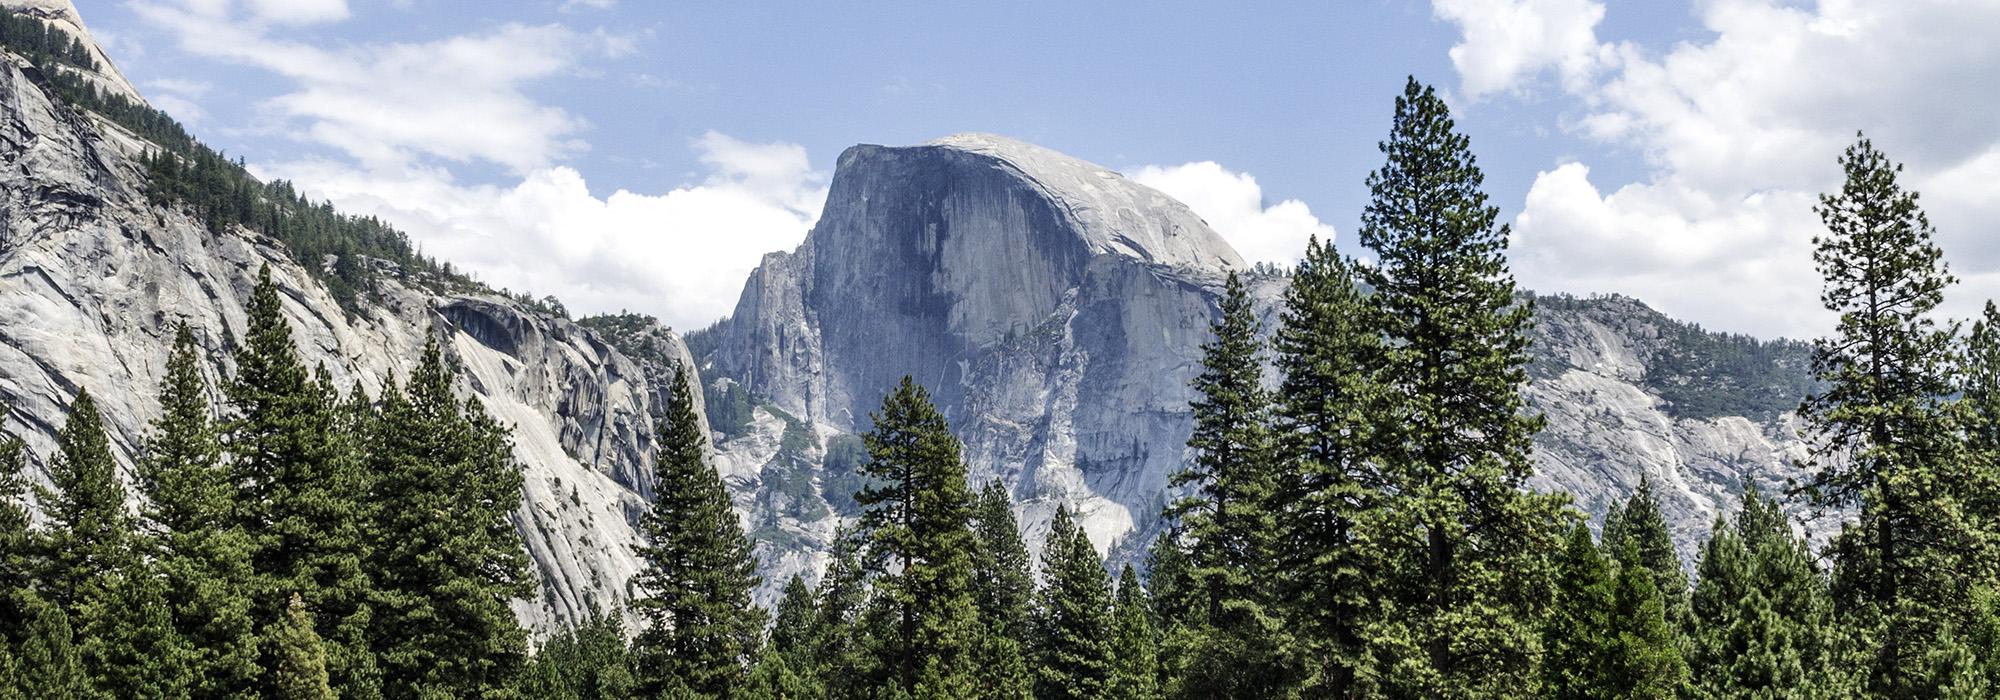 Yosemite National Park, Yosemite, CA